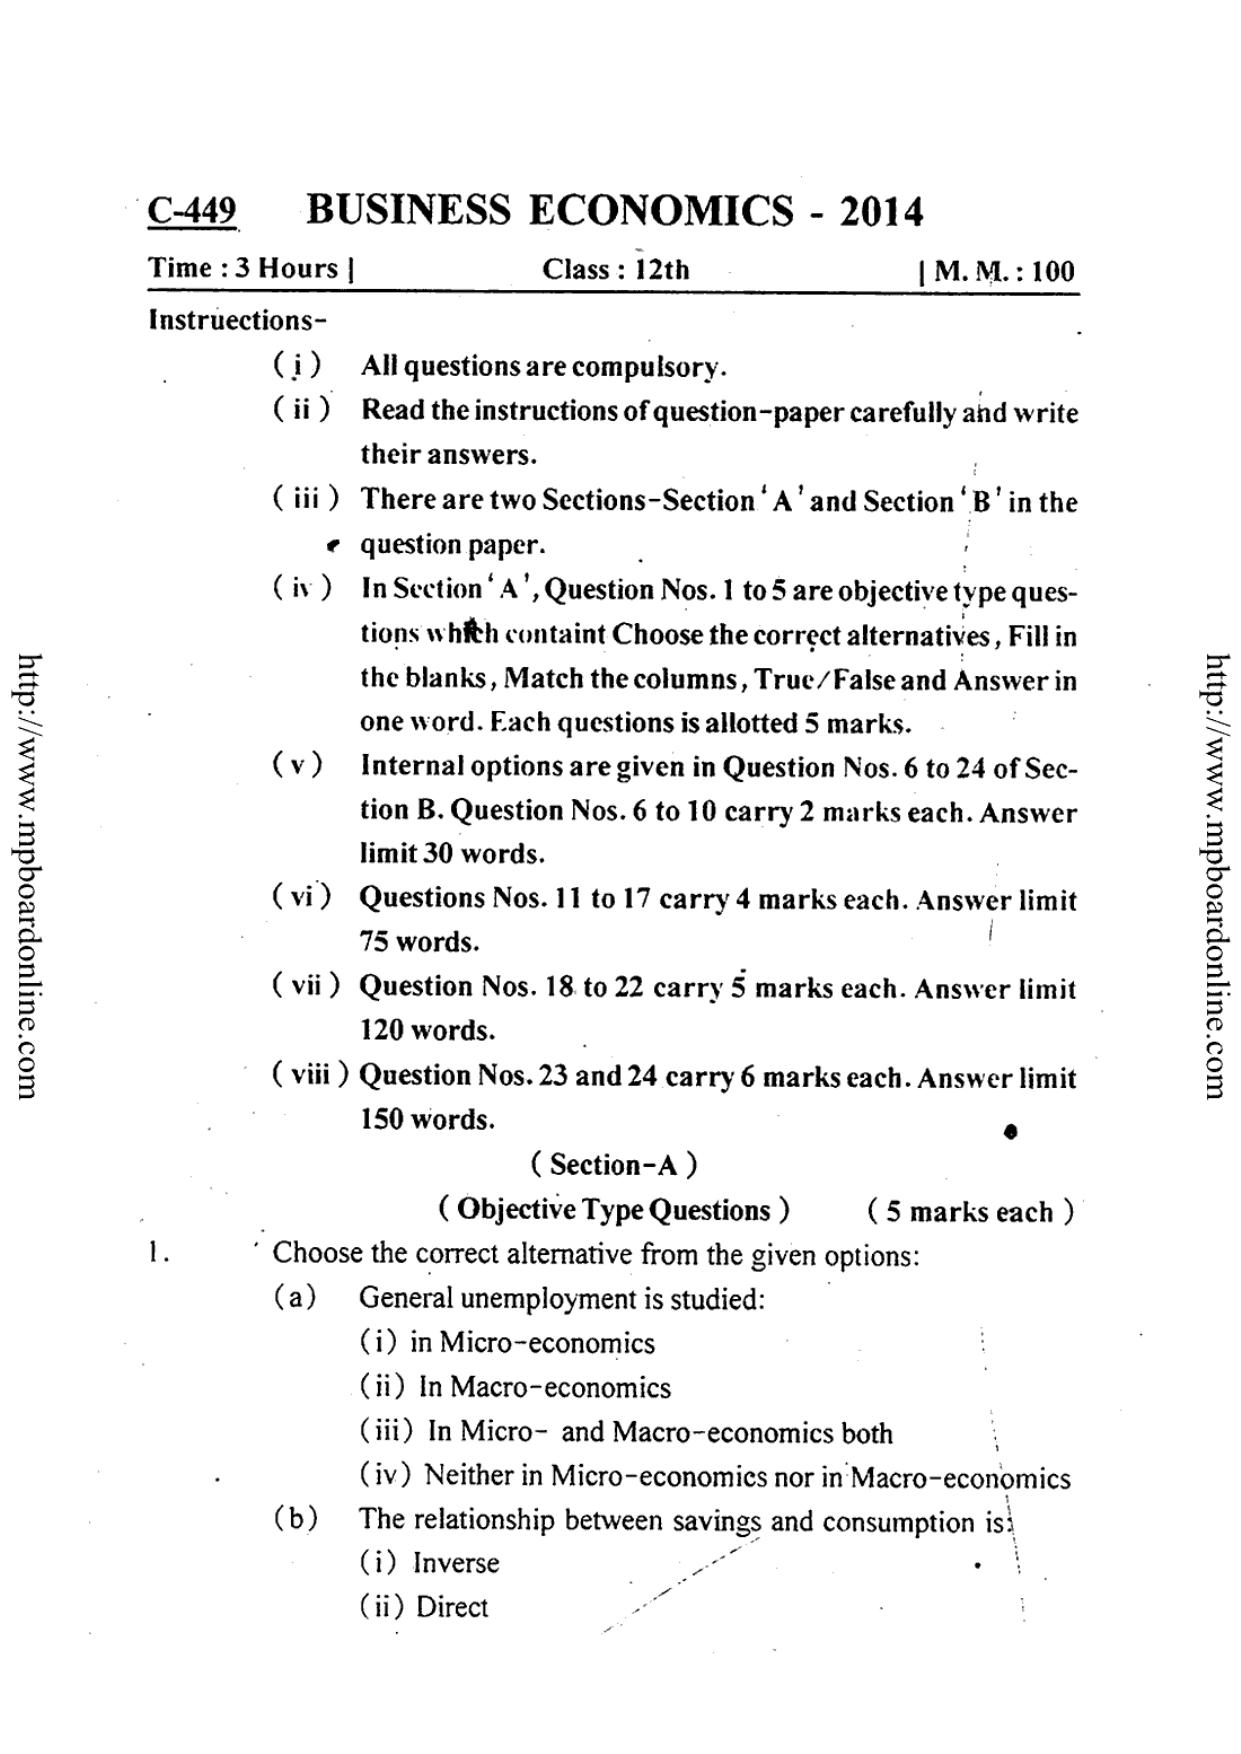 MP Board Class 12 Business Economics 2014 Question Paper - Page 1